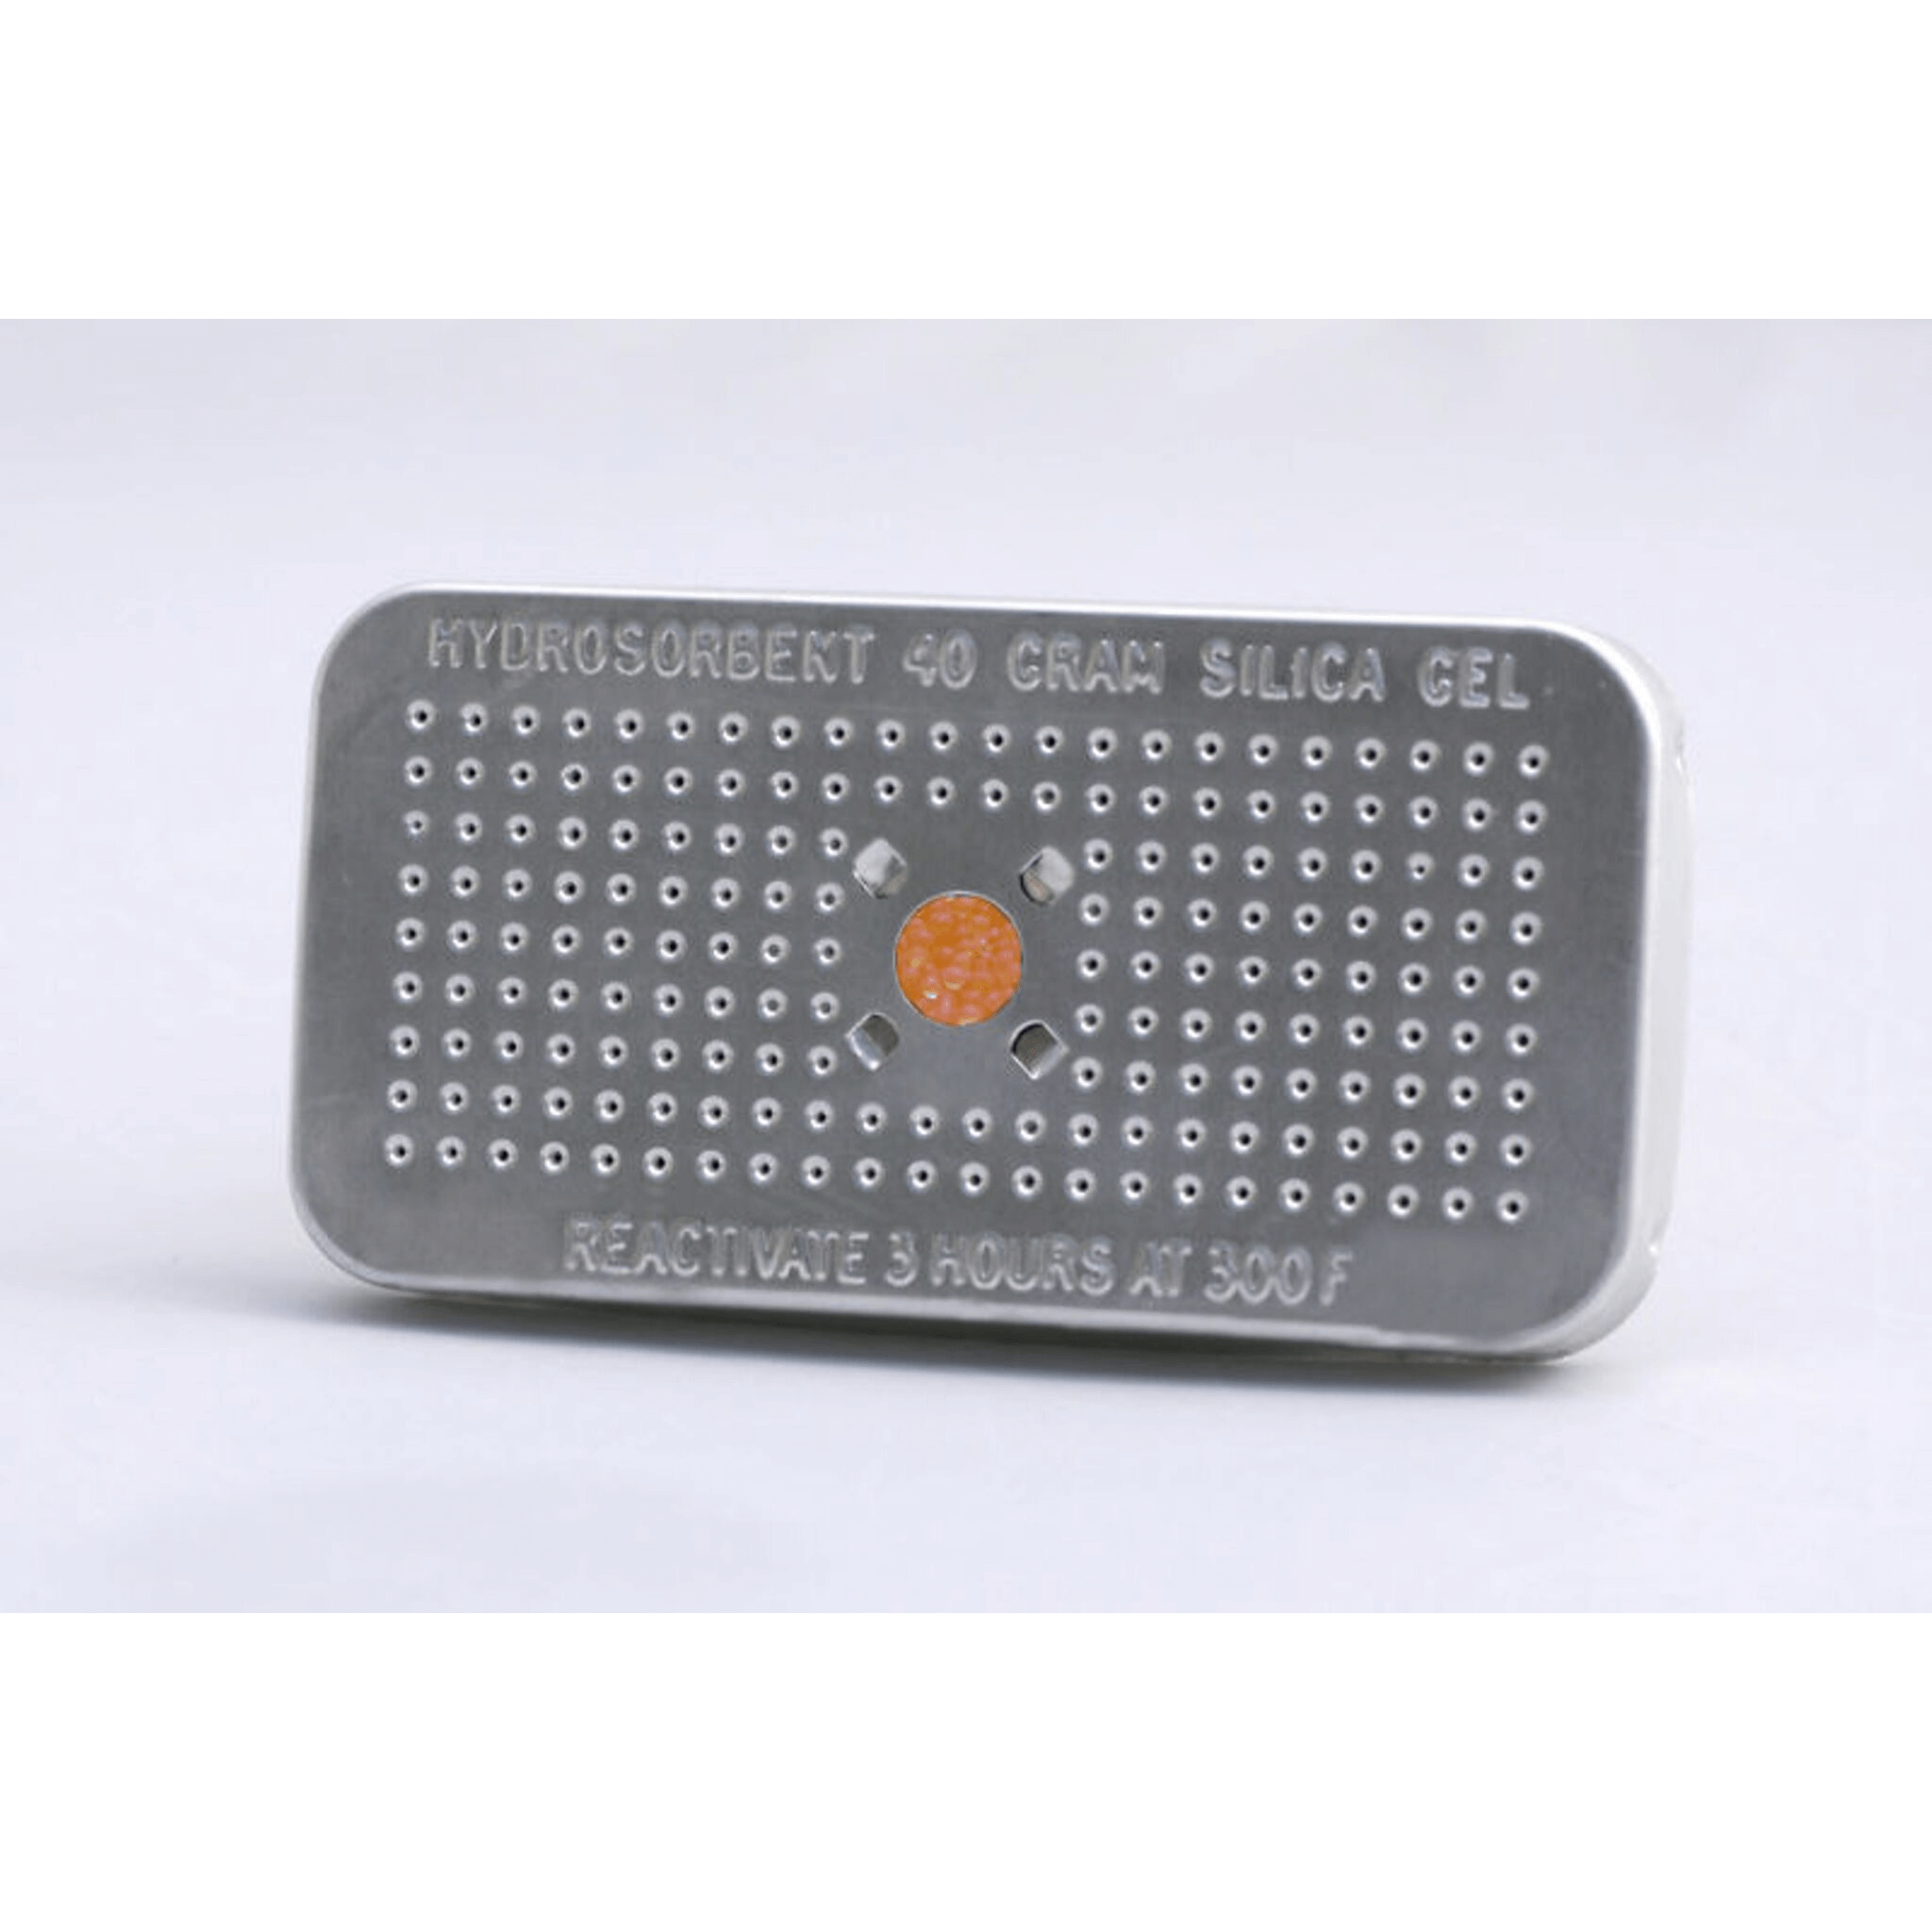 Moisture Absorbing Silica Gel for Safes | 40 gram